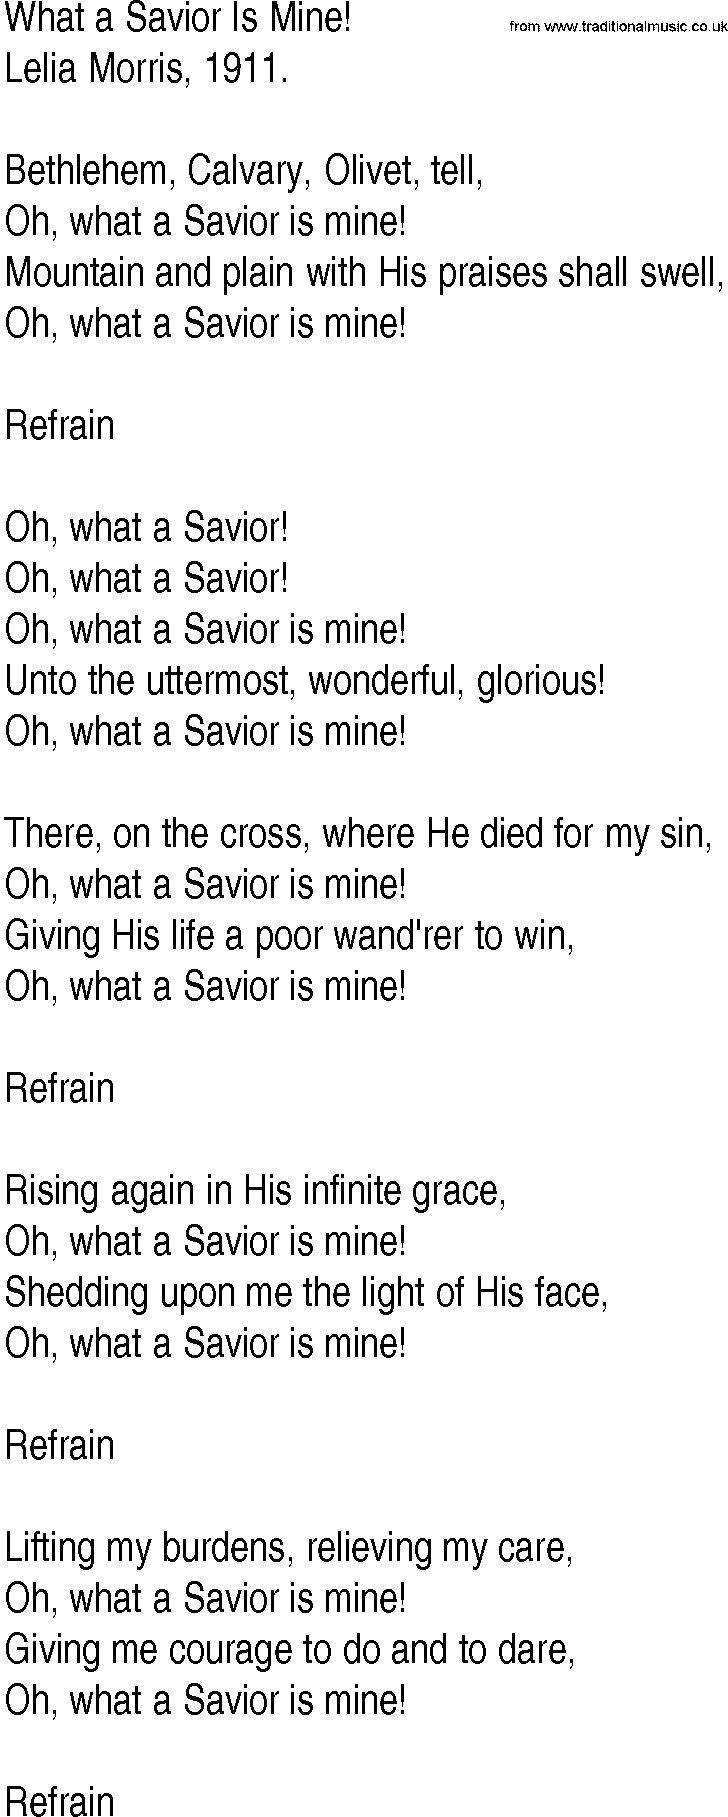 Hymn and Gospel Song: What a Savior Is Mine! by Lelia Morris lyrics